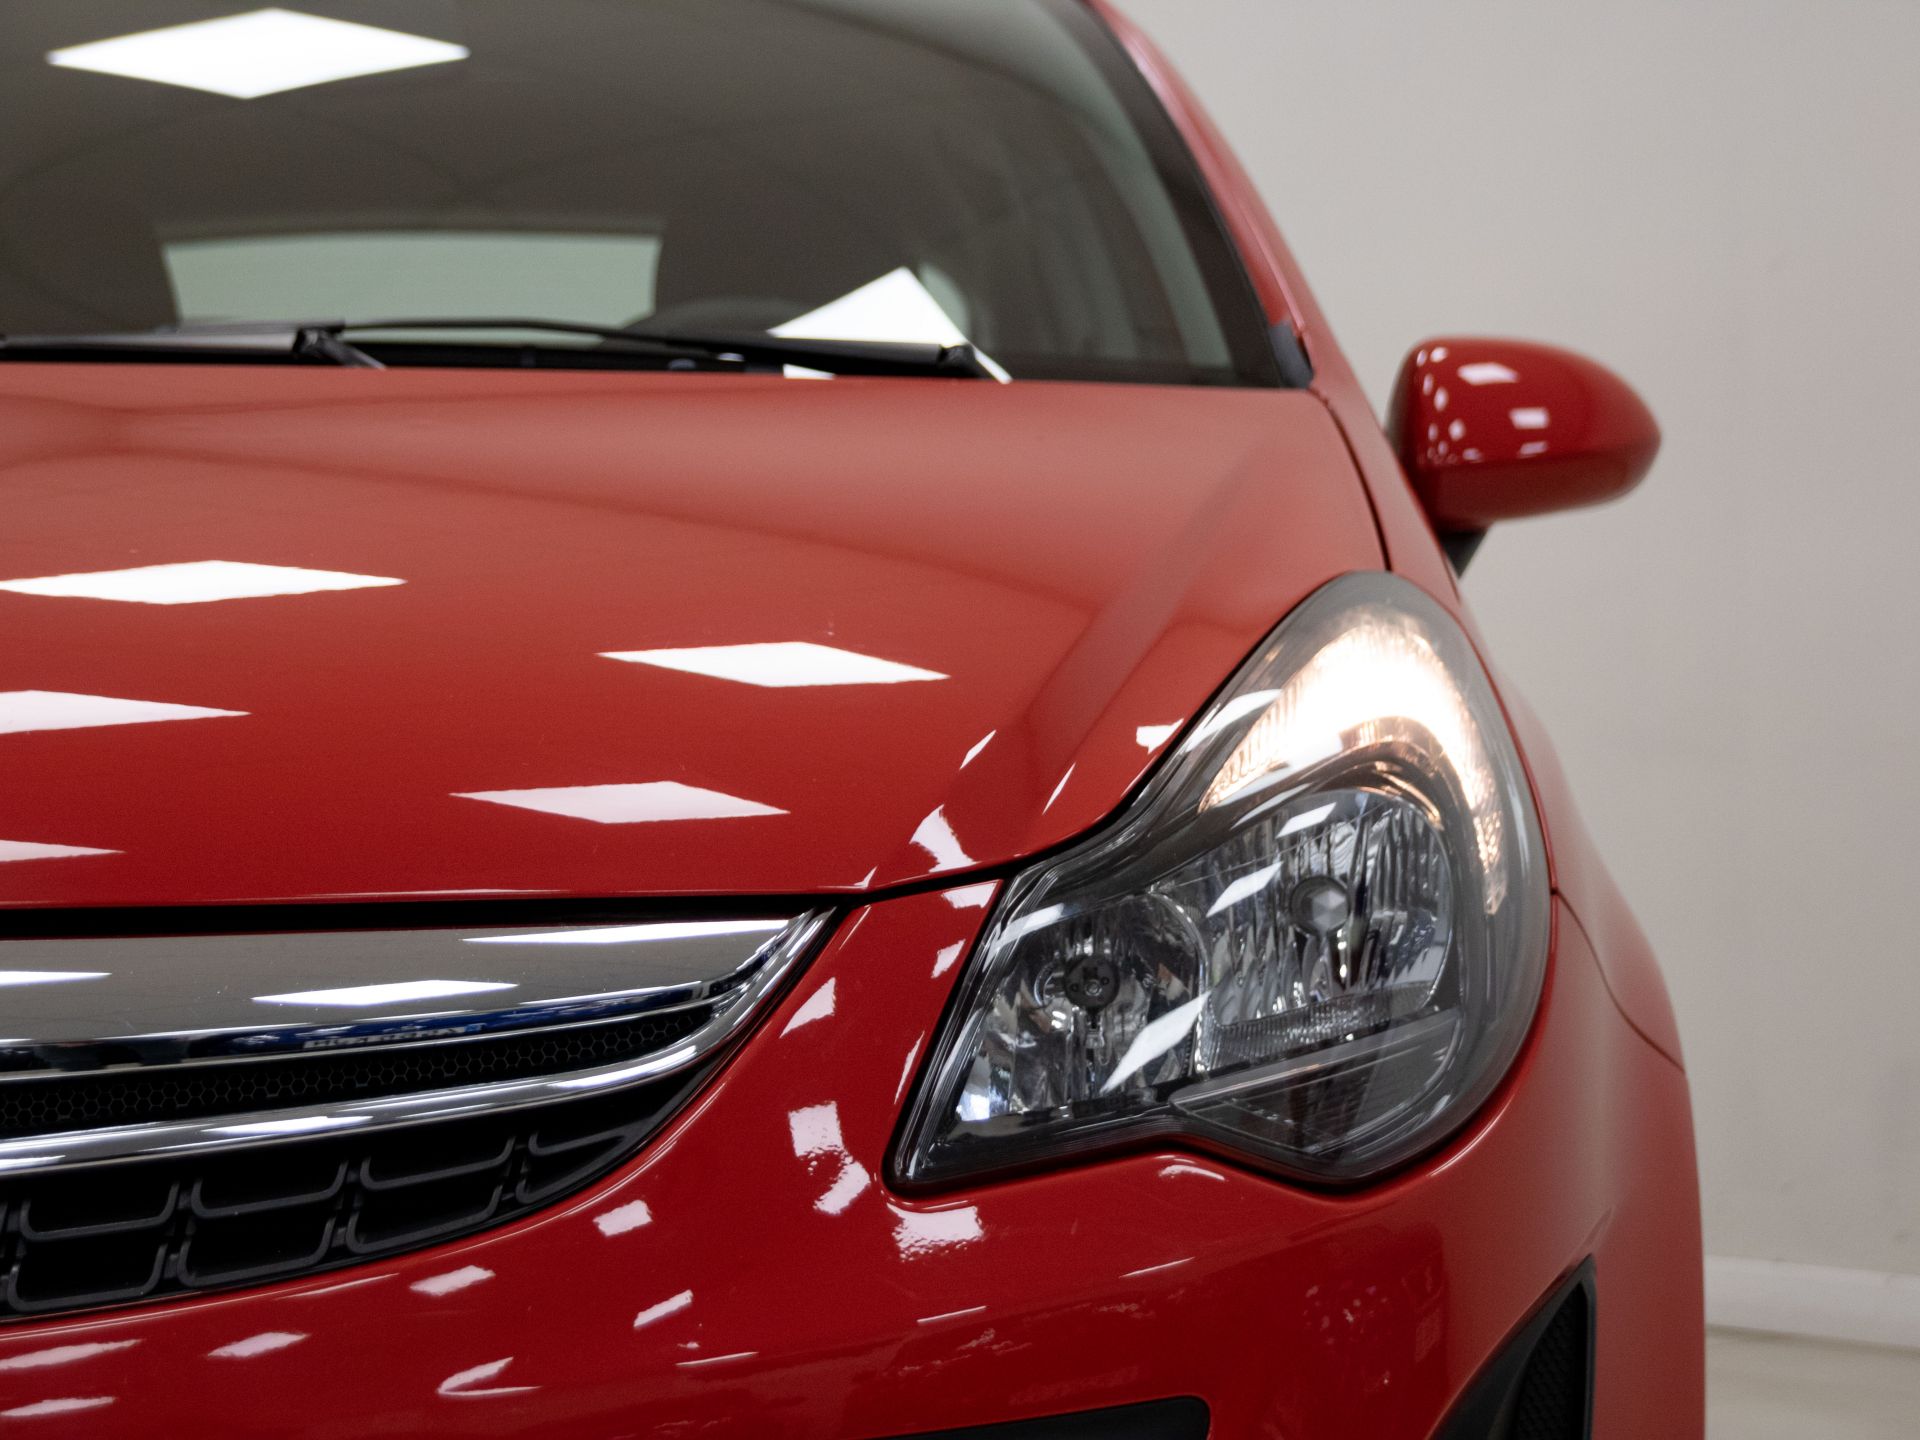 Opel Corsa 1.2 Selective Start & Stop